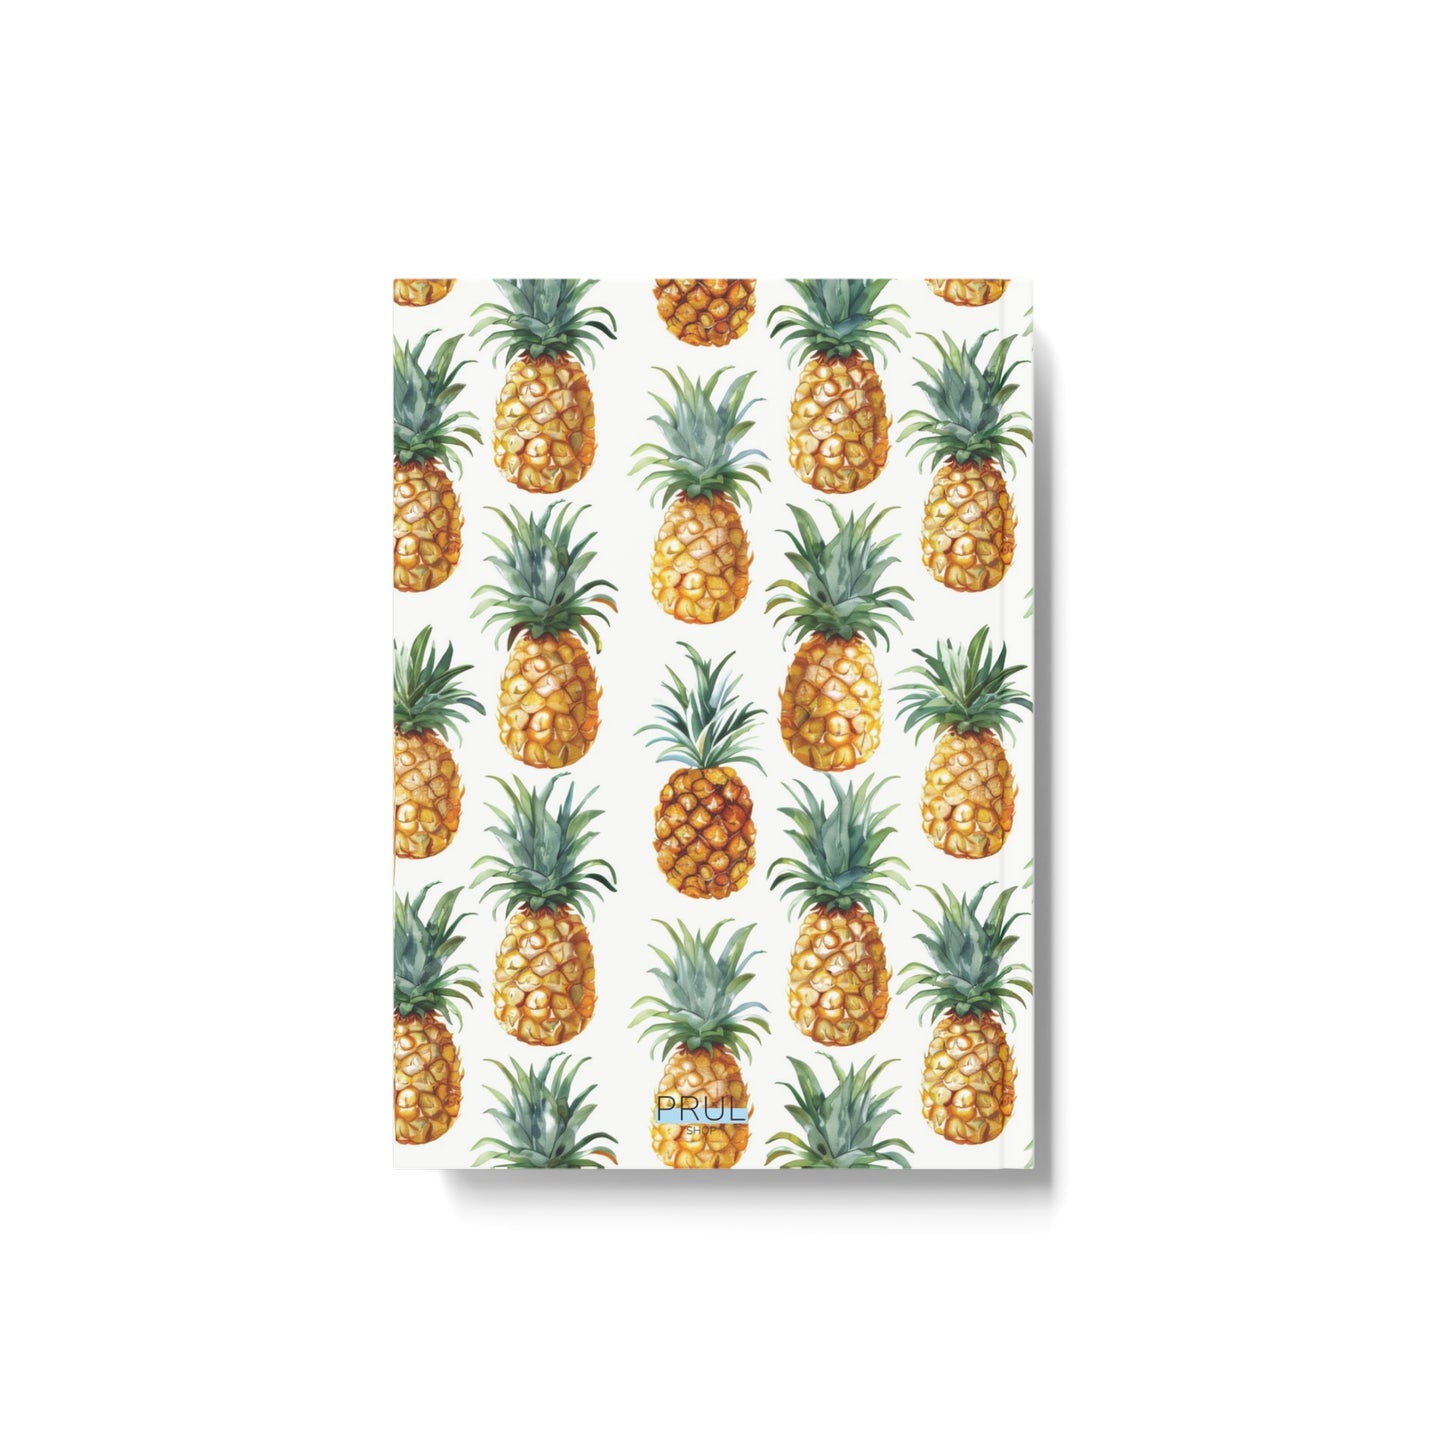 Watercolour pineapple pattern - Blank notebook